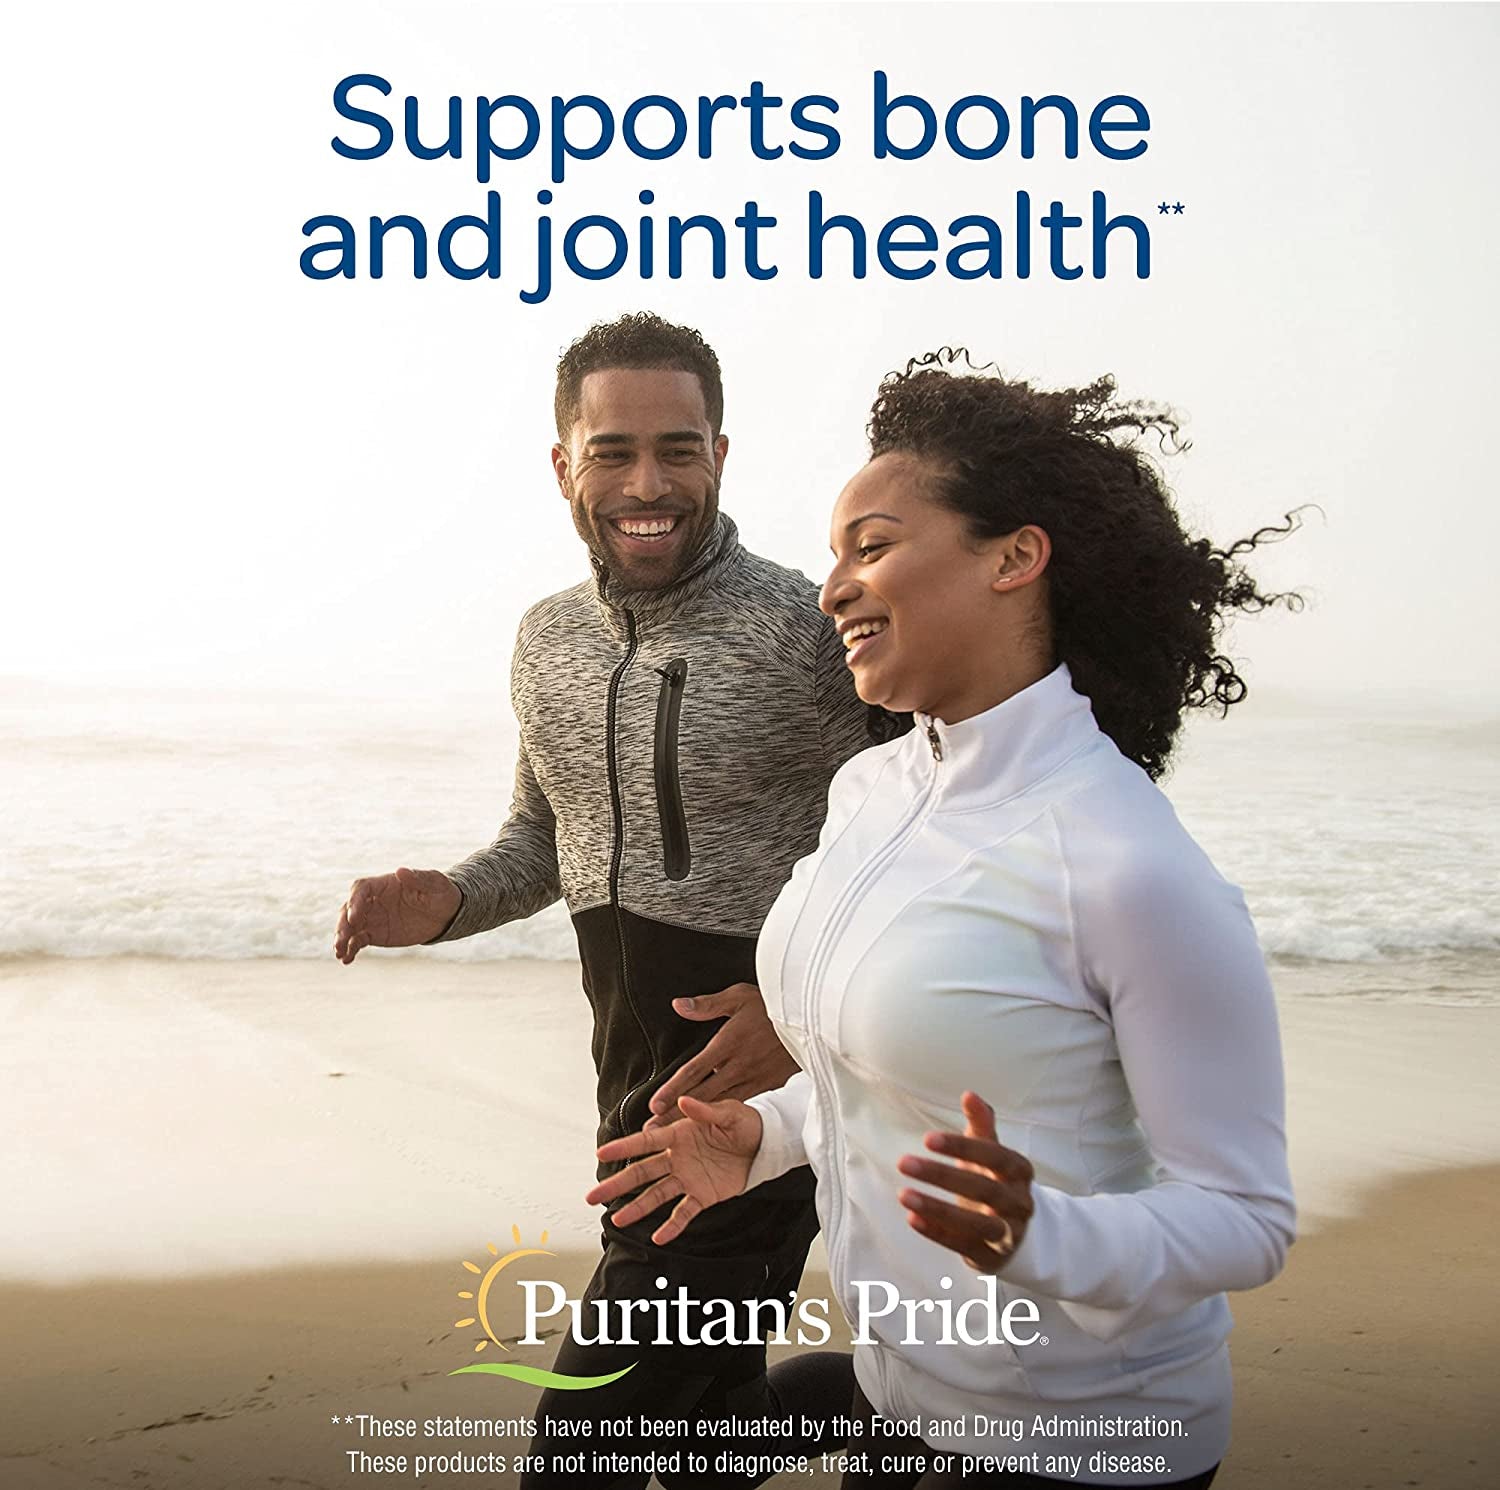 Puritan'S Pride Vitamin K 100 Mcg Supports Bone and Joint Health, 100 Count